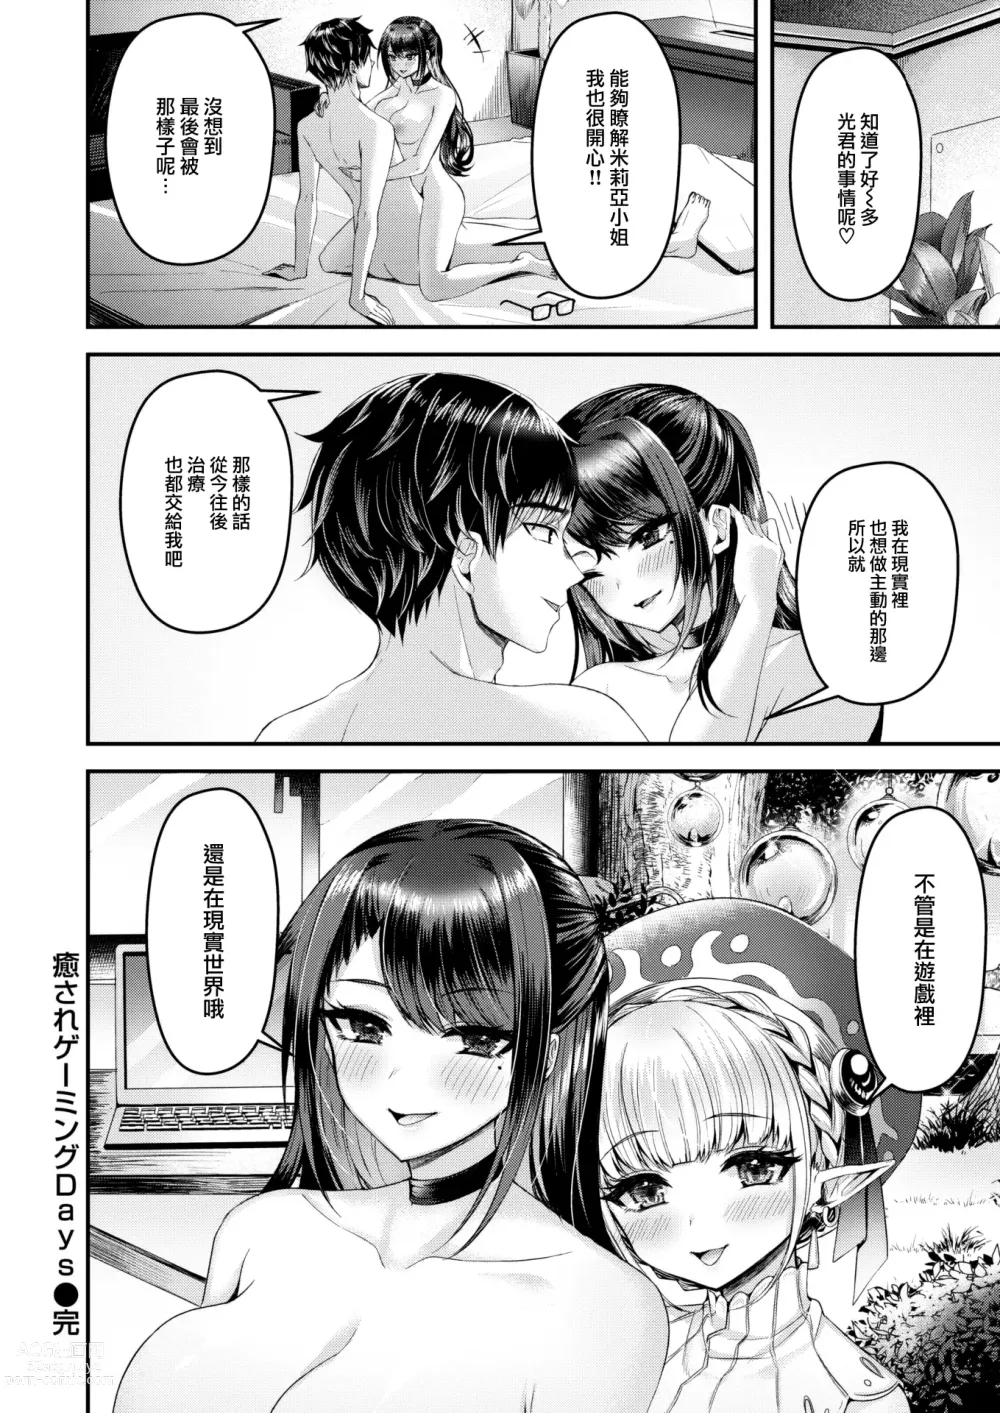 Page 23 of manga Iyasare Gaming Days